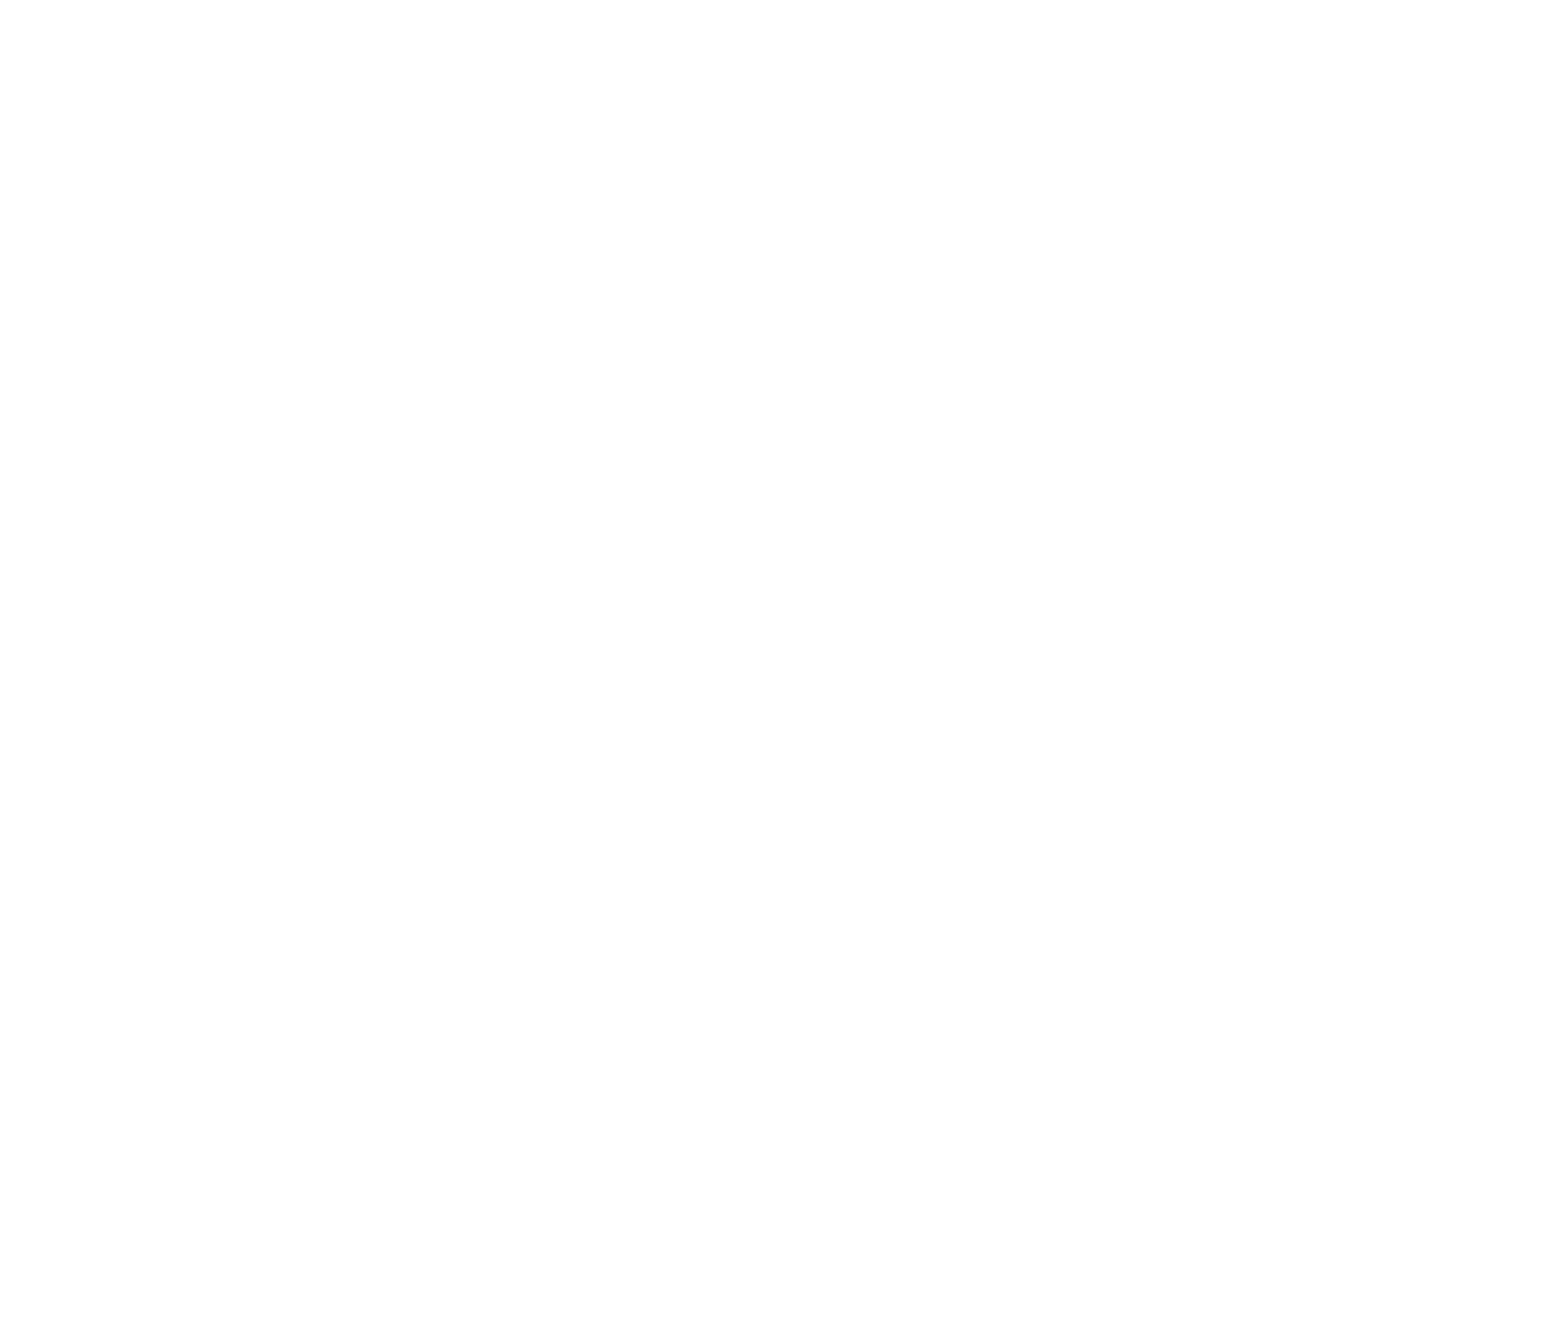 Forgame logo pour fonds sombres (PNG transparent)